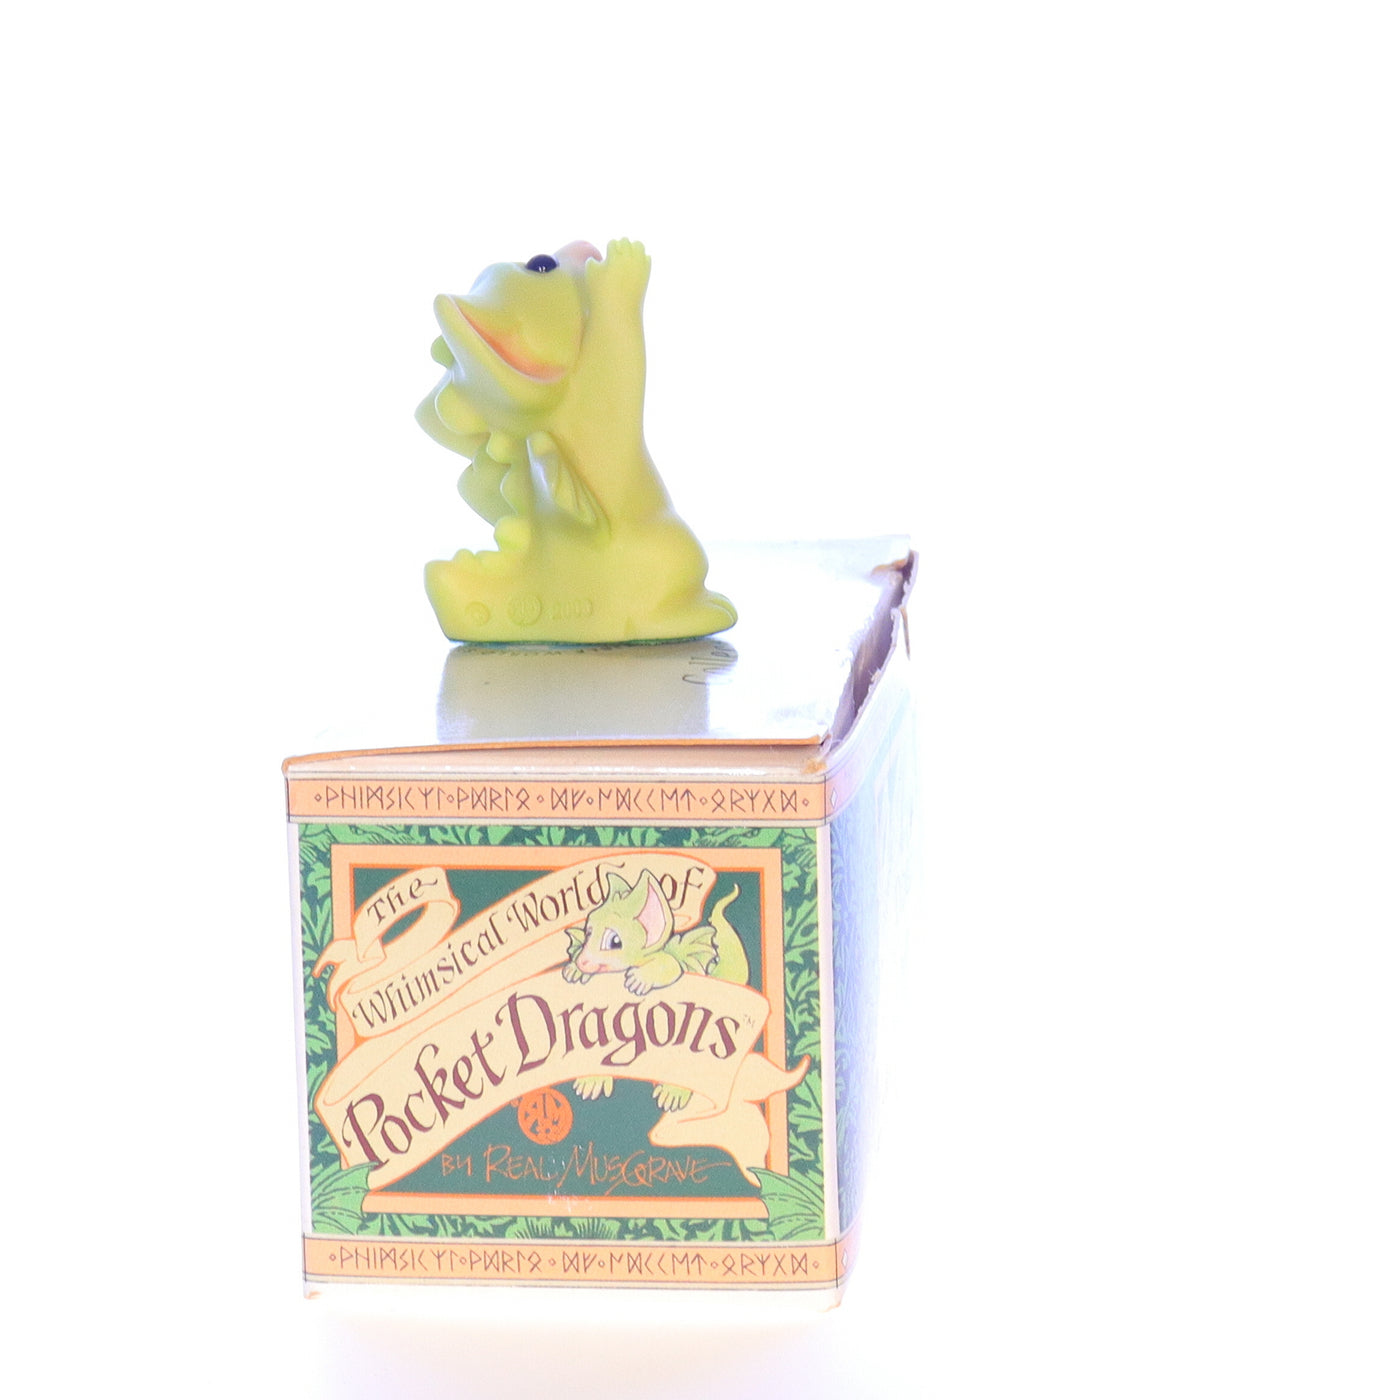 Whimsical World of Pocket Dragons Vintage Resin Fantasy Figurine 002927 1998 2"